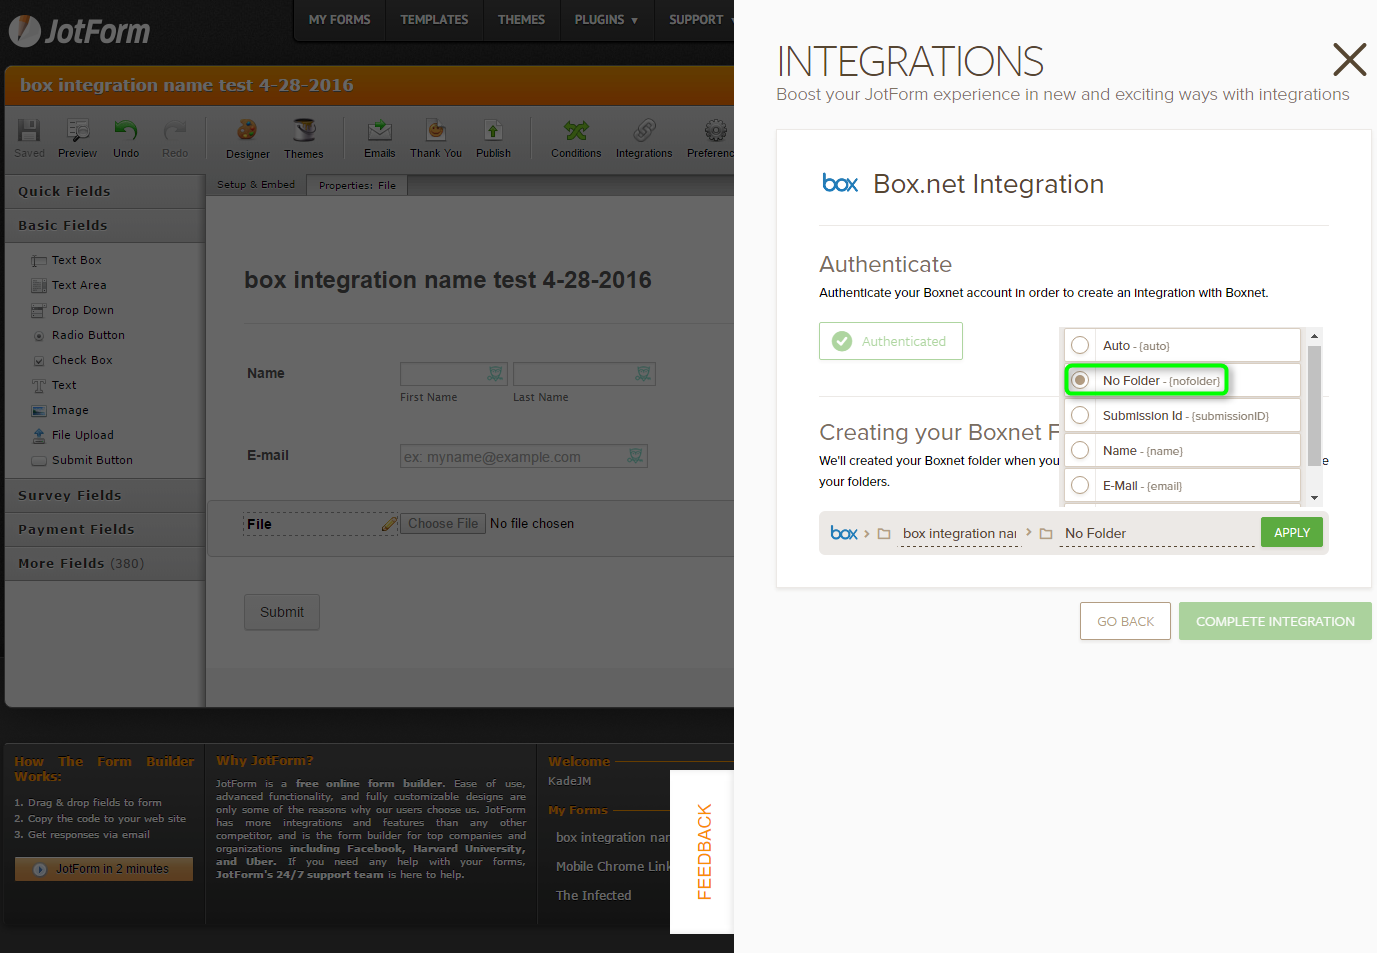 Box Integration: Files are not uploading to Box Image 1 Screenshot 20